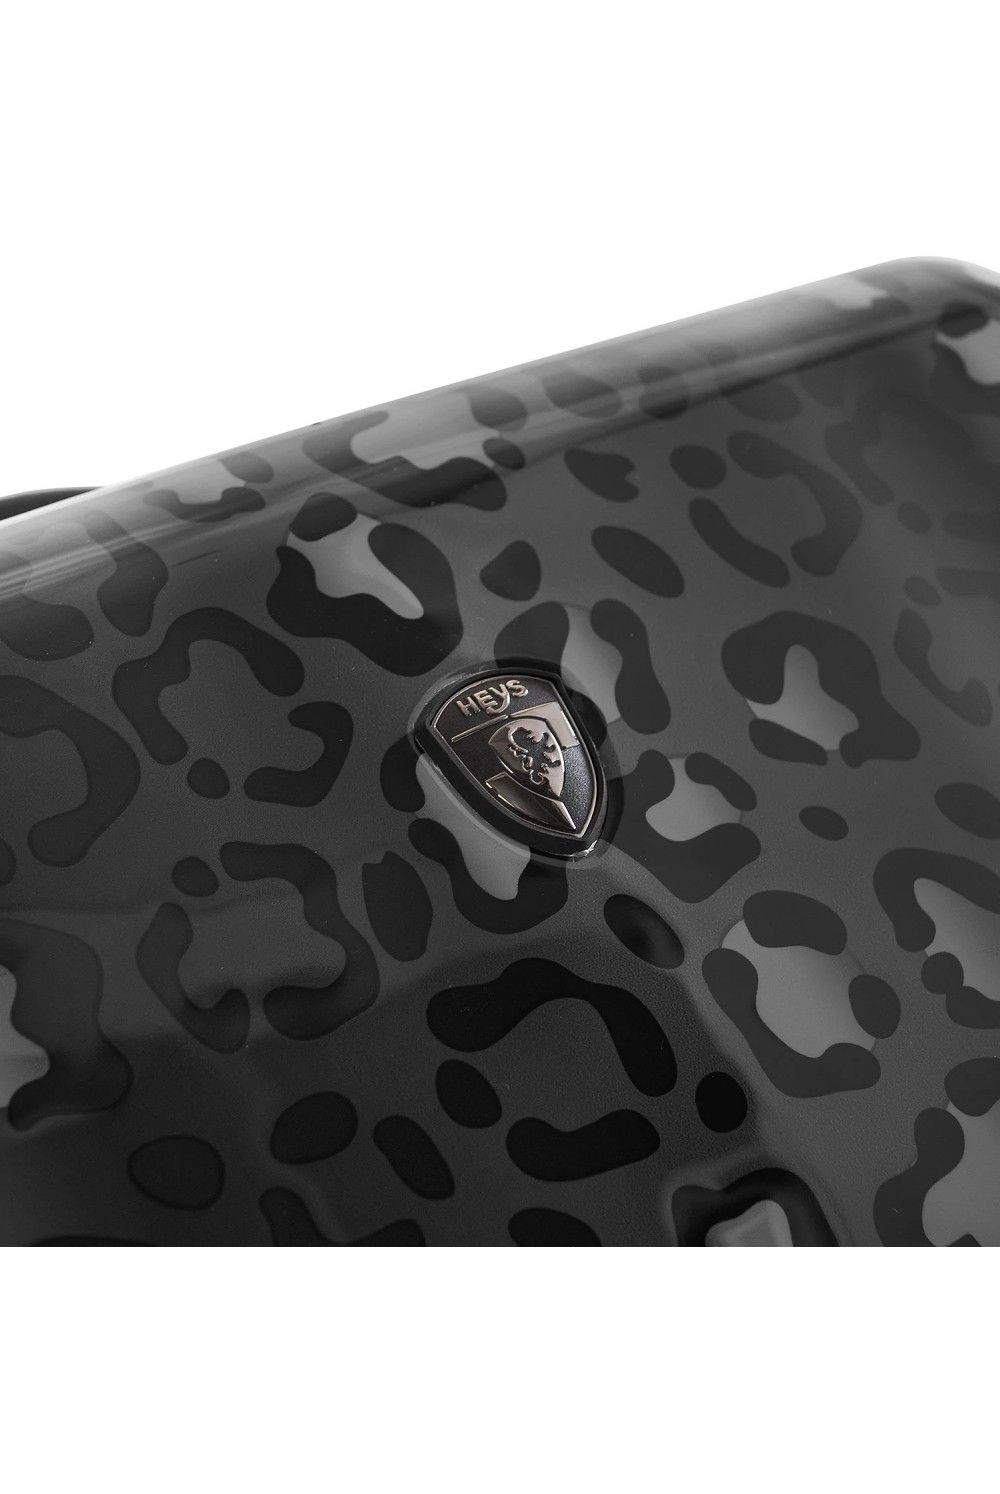 Koffer Heys Black Leopard 4 Rad Medium 66cm erweiterbar